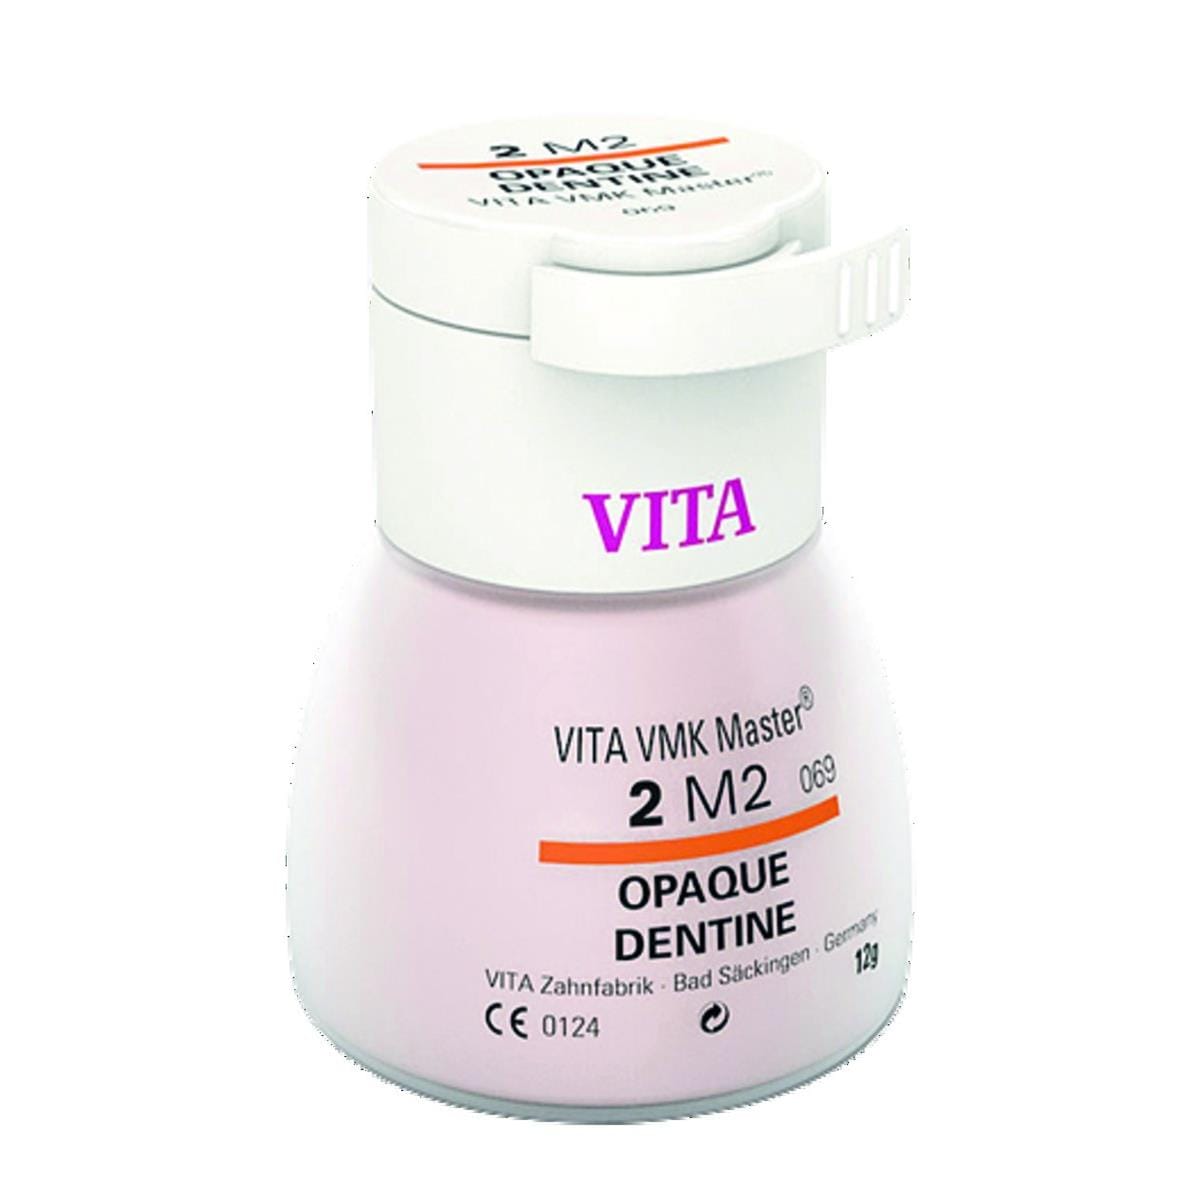 VMK Master VITA - Dentine Opaque - 1M1 - Le flacon de 12 g